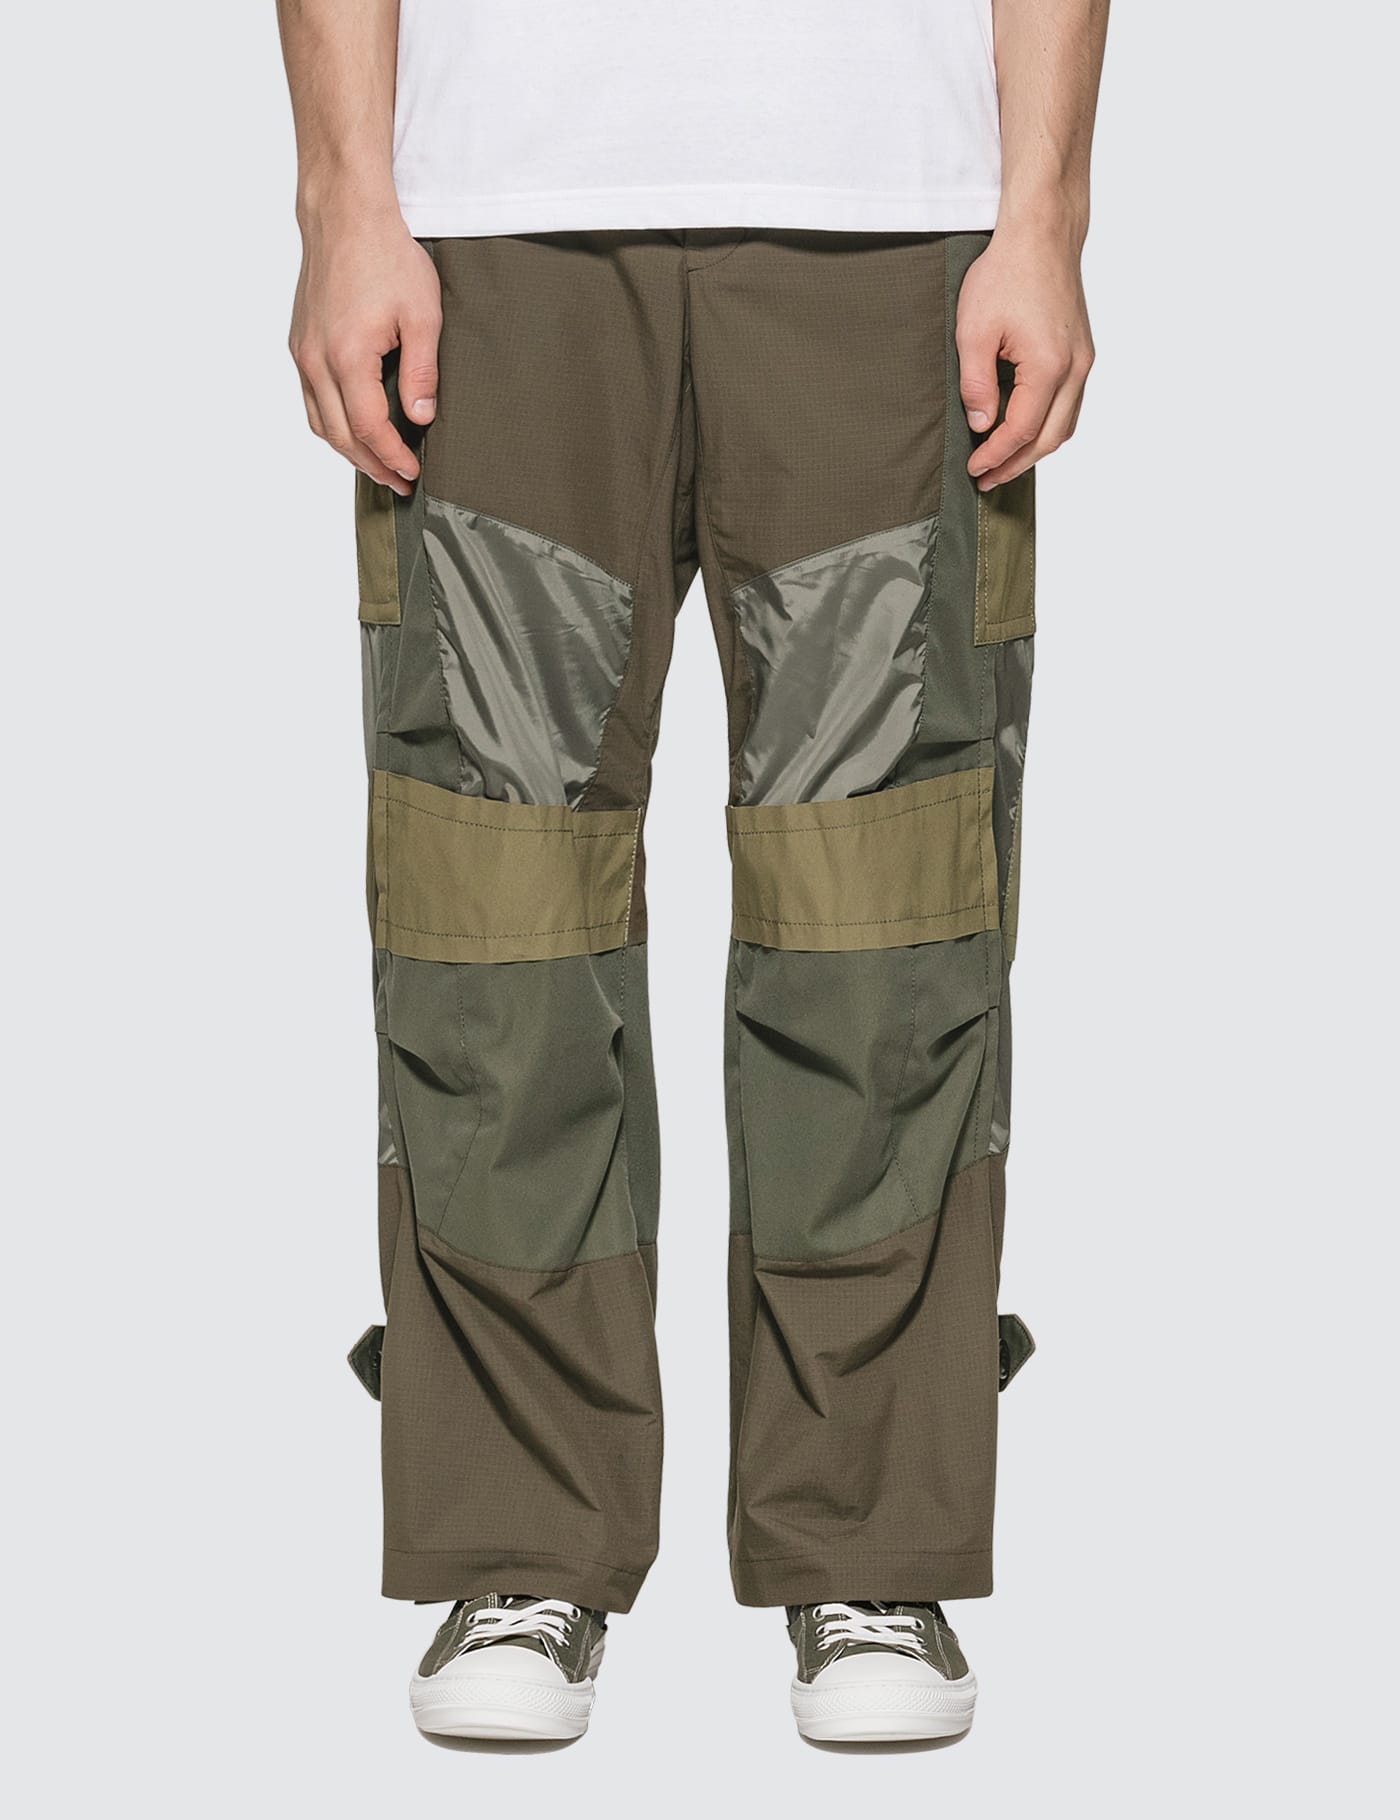 Sacai - Fabric Combo Pants | HBX - Globally Curated Fashion and 